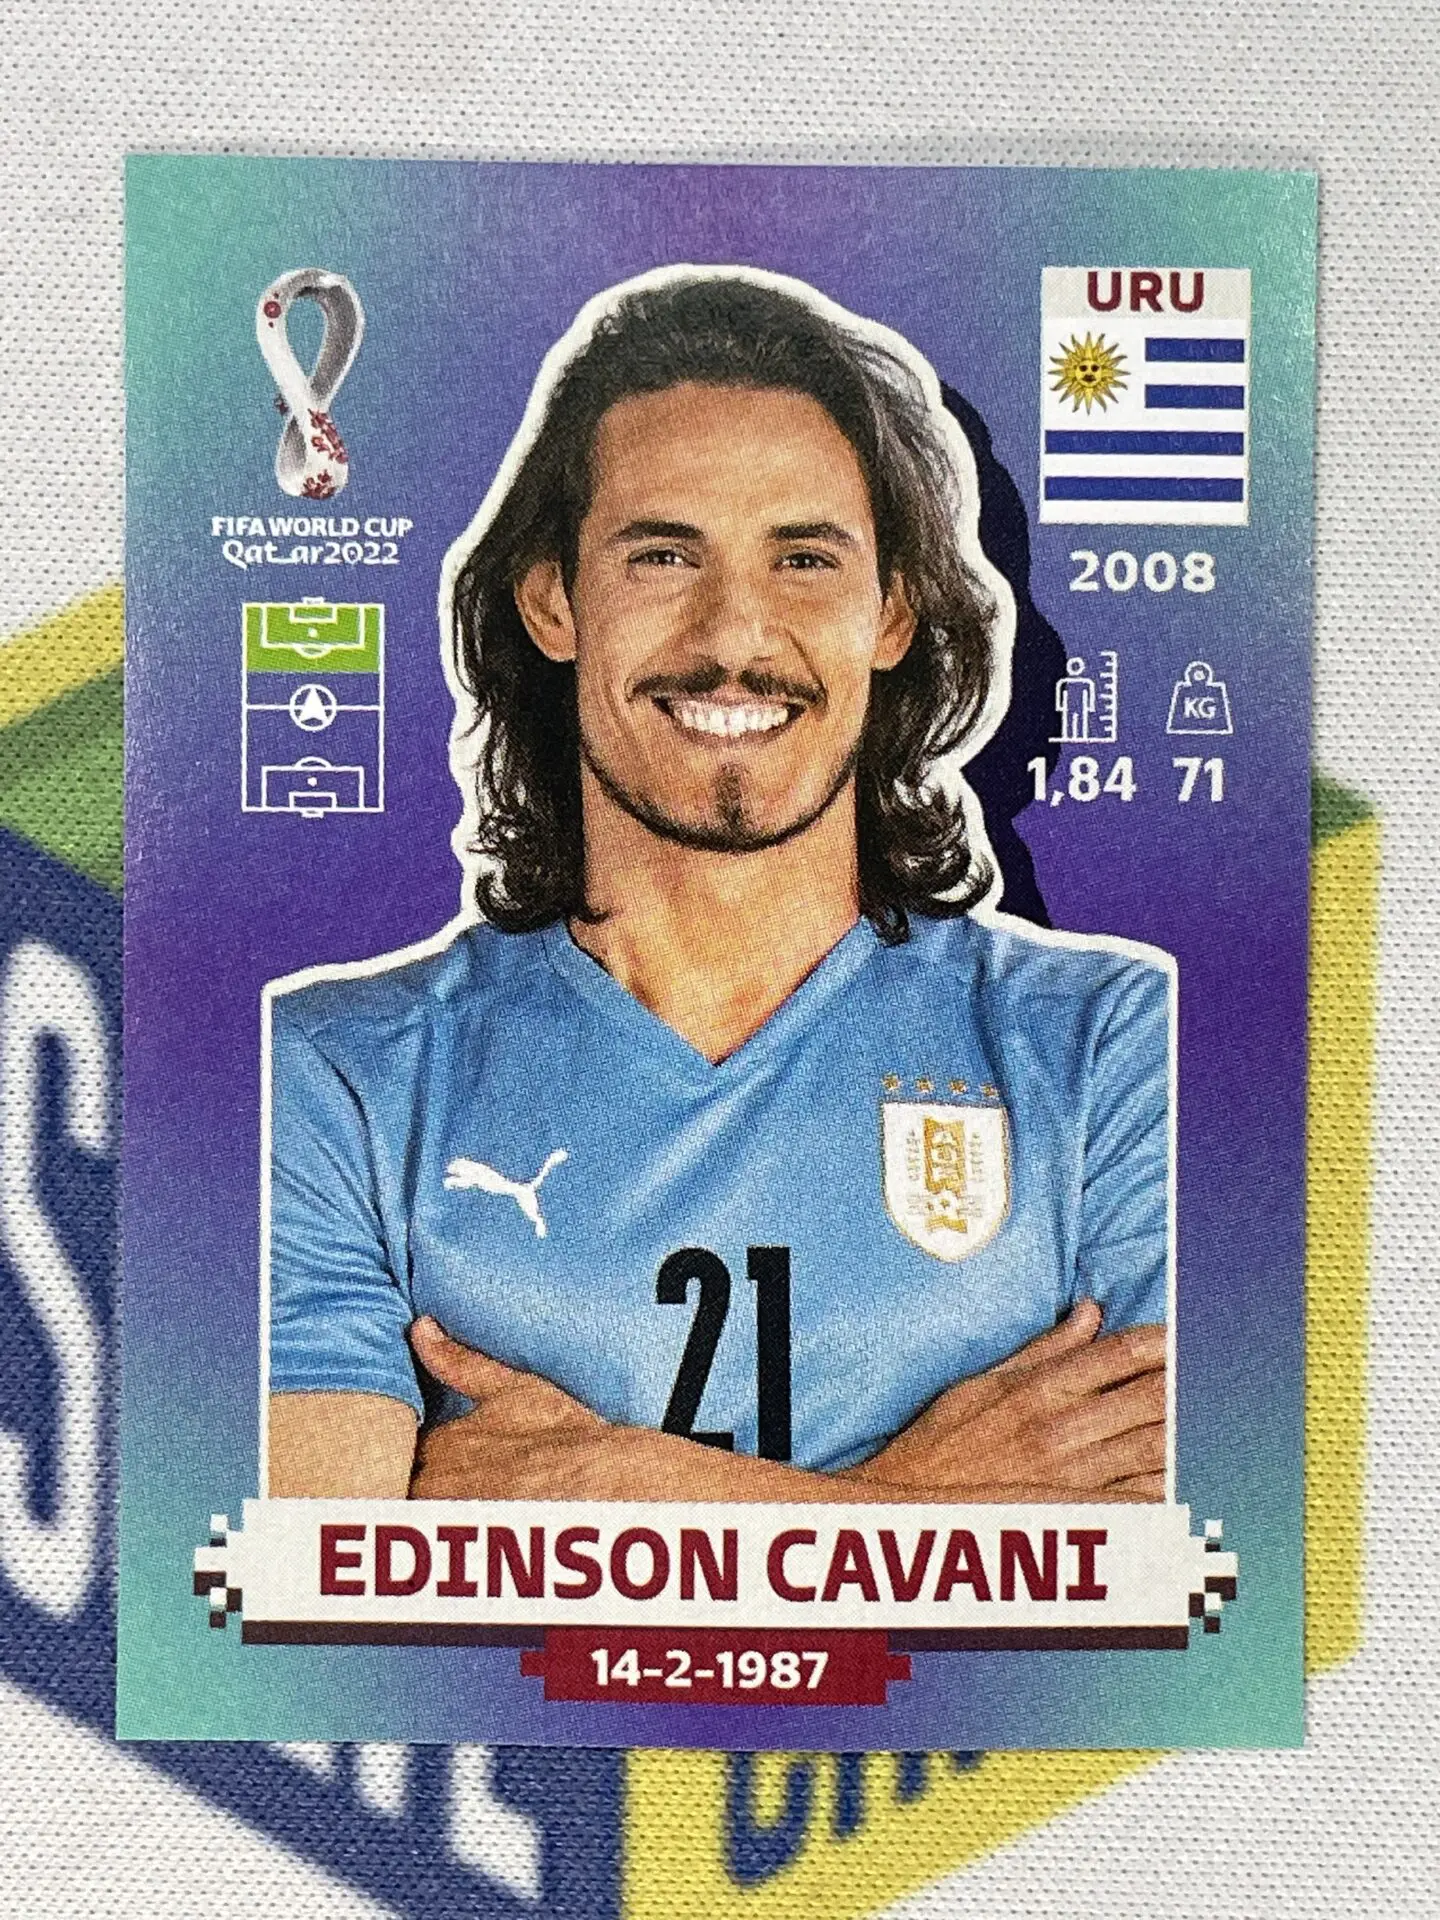 Edinson Cavani iconic Uruguay kit